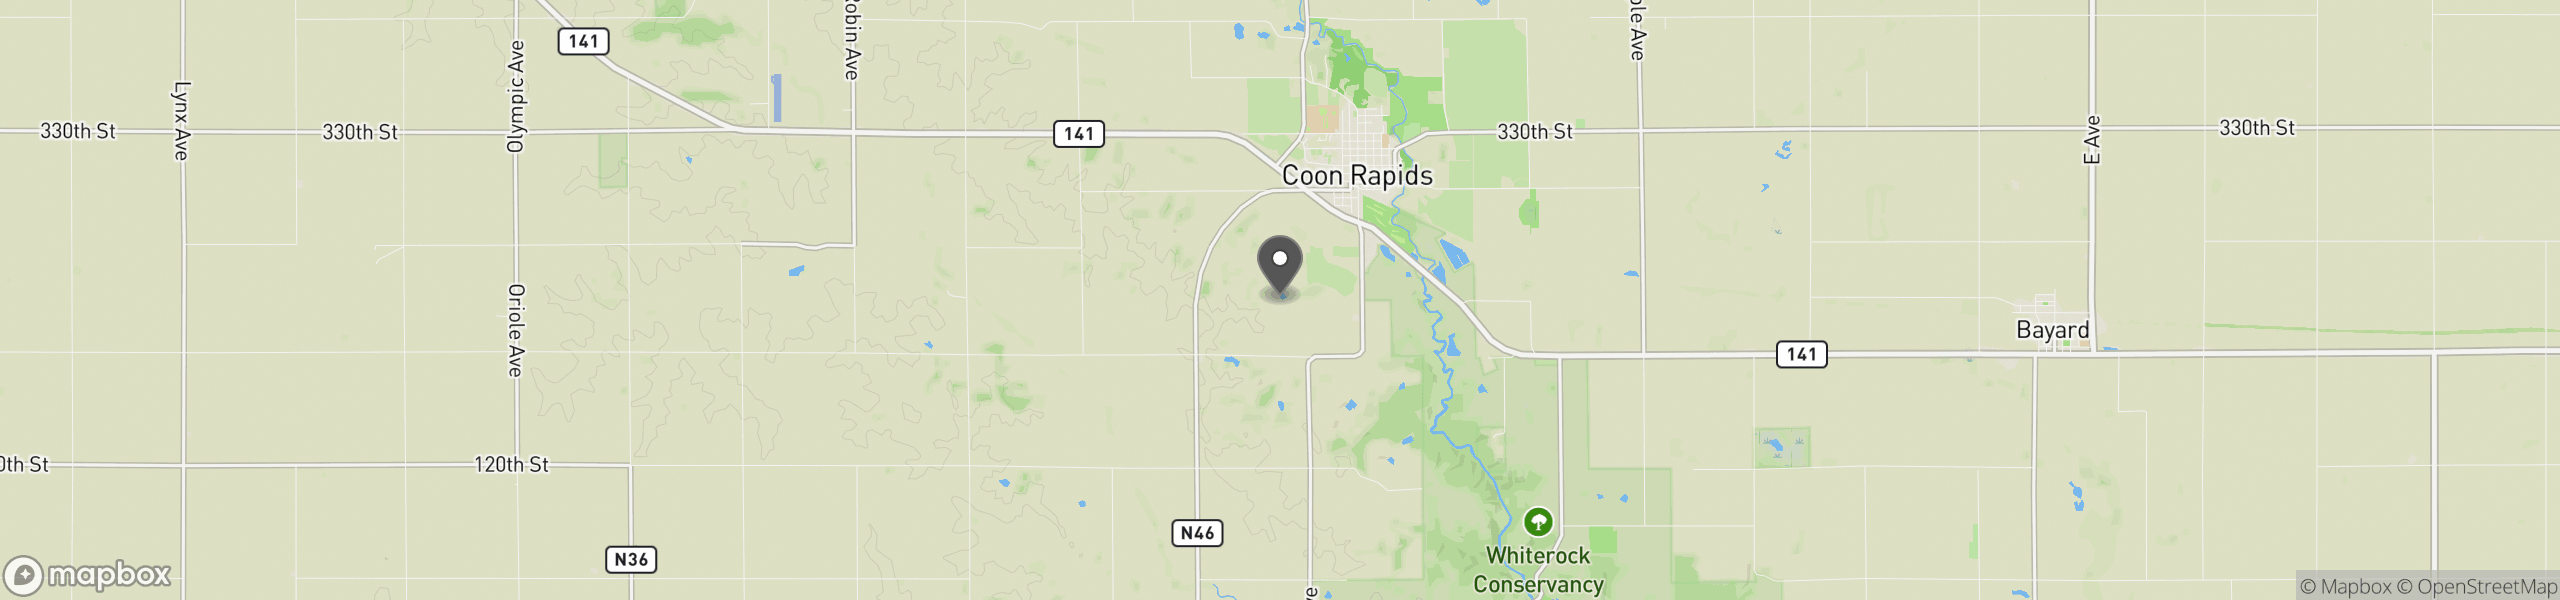 Coon Rapids, IA